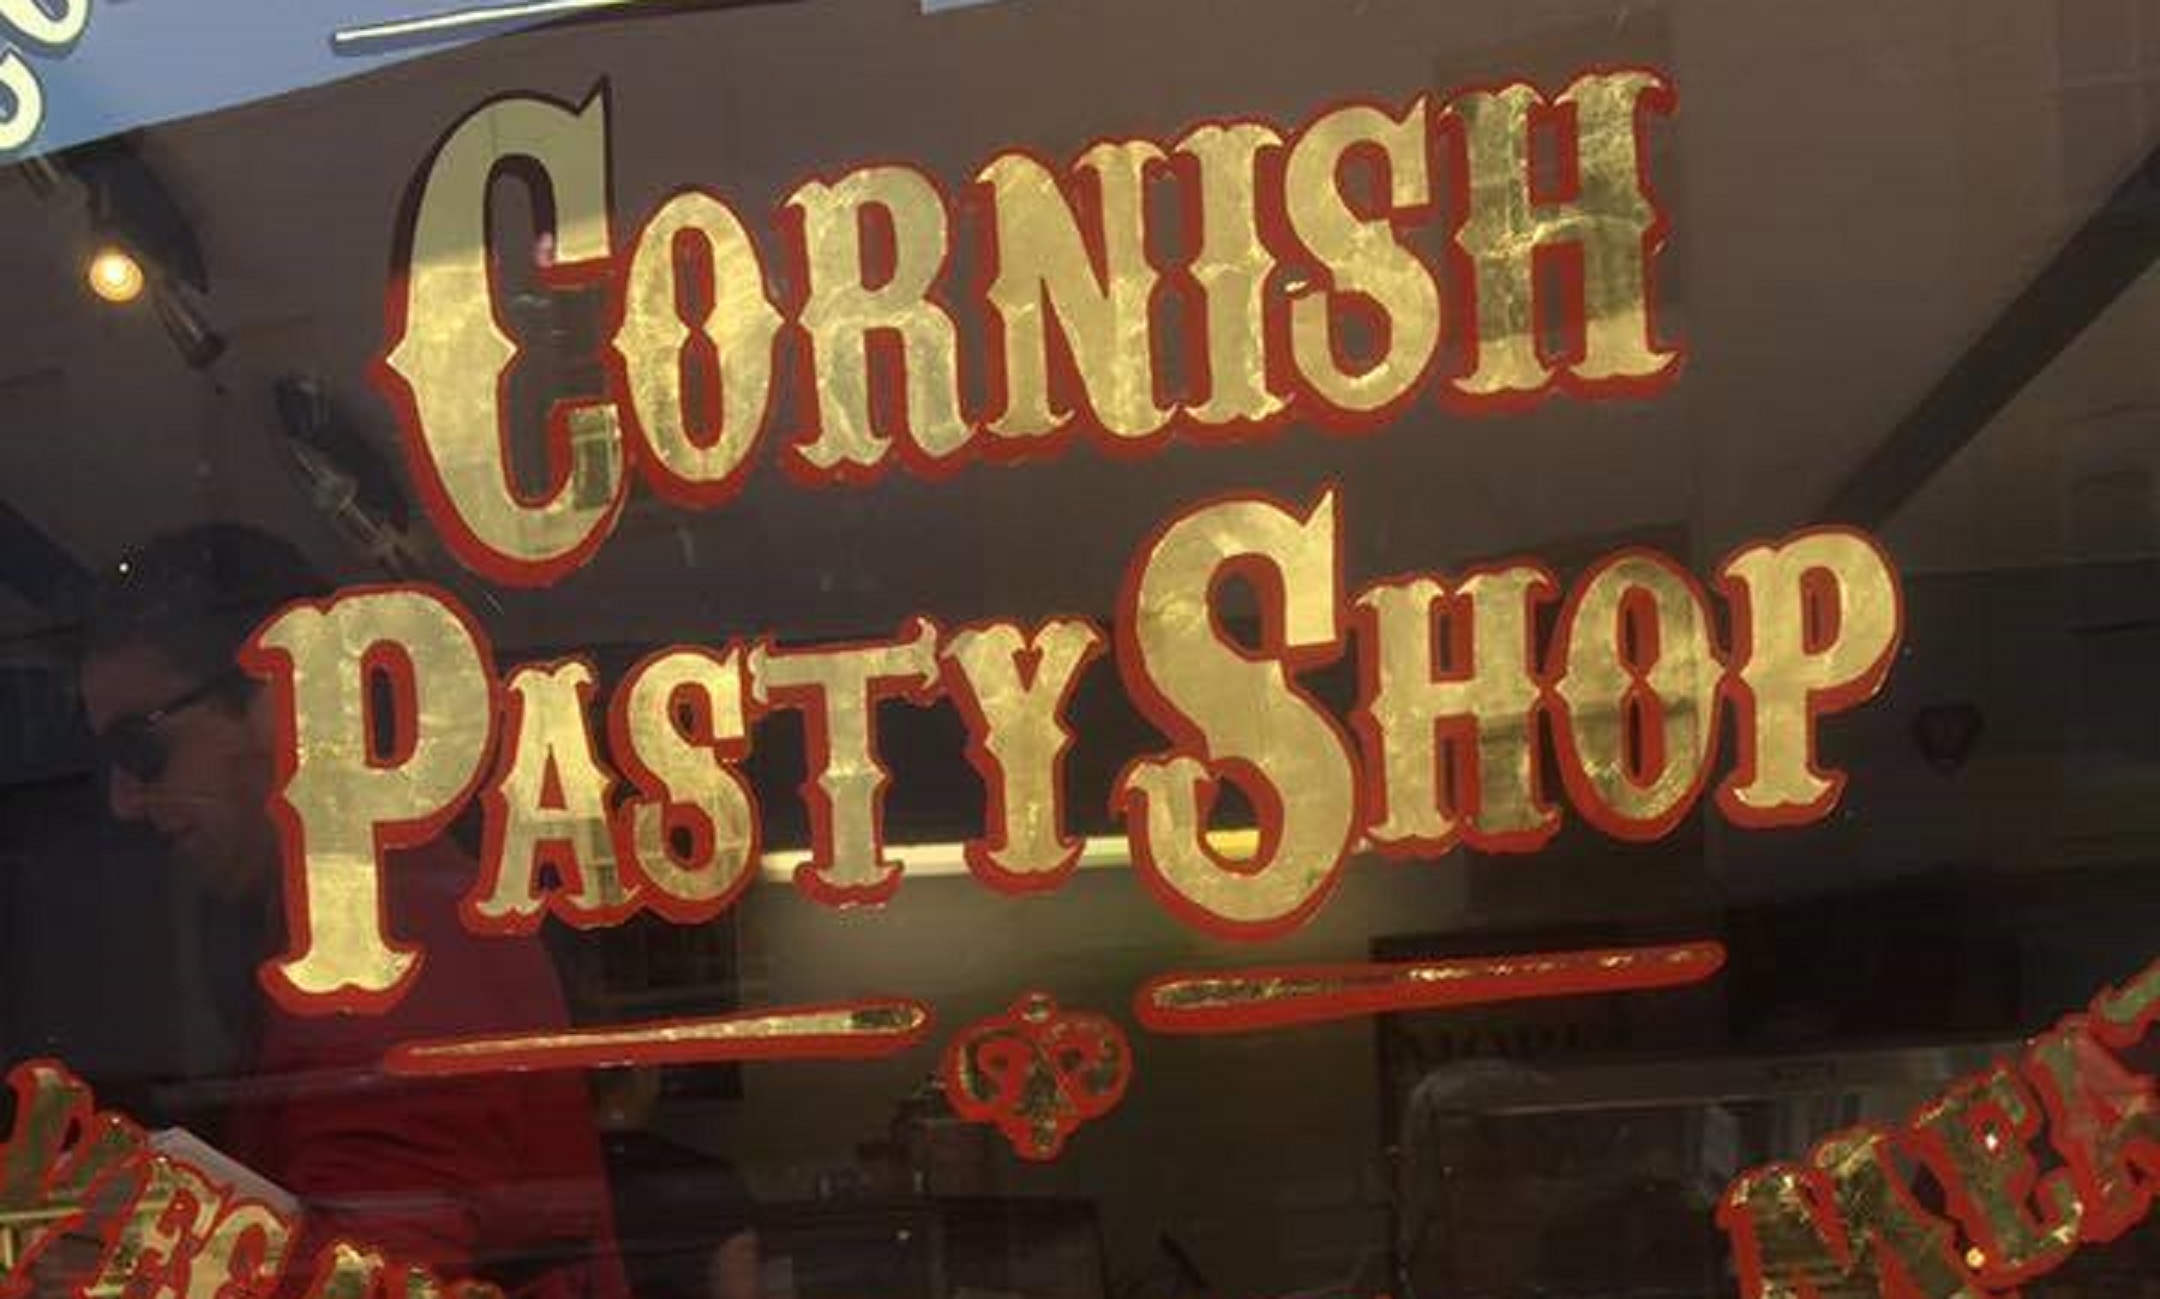 Our Cornish Pasty Shop